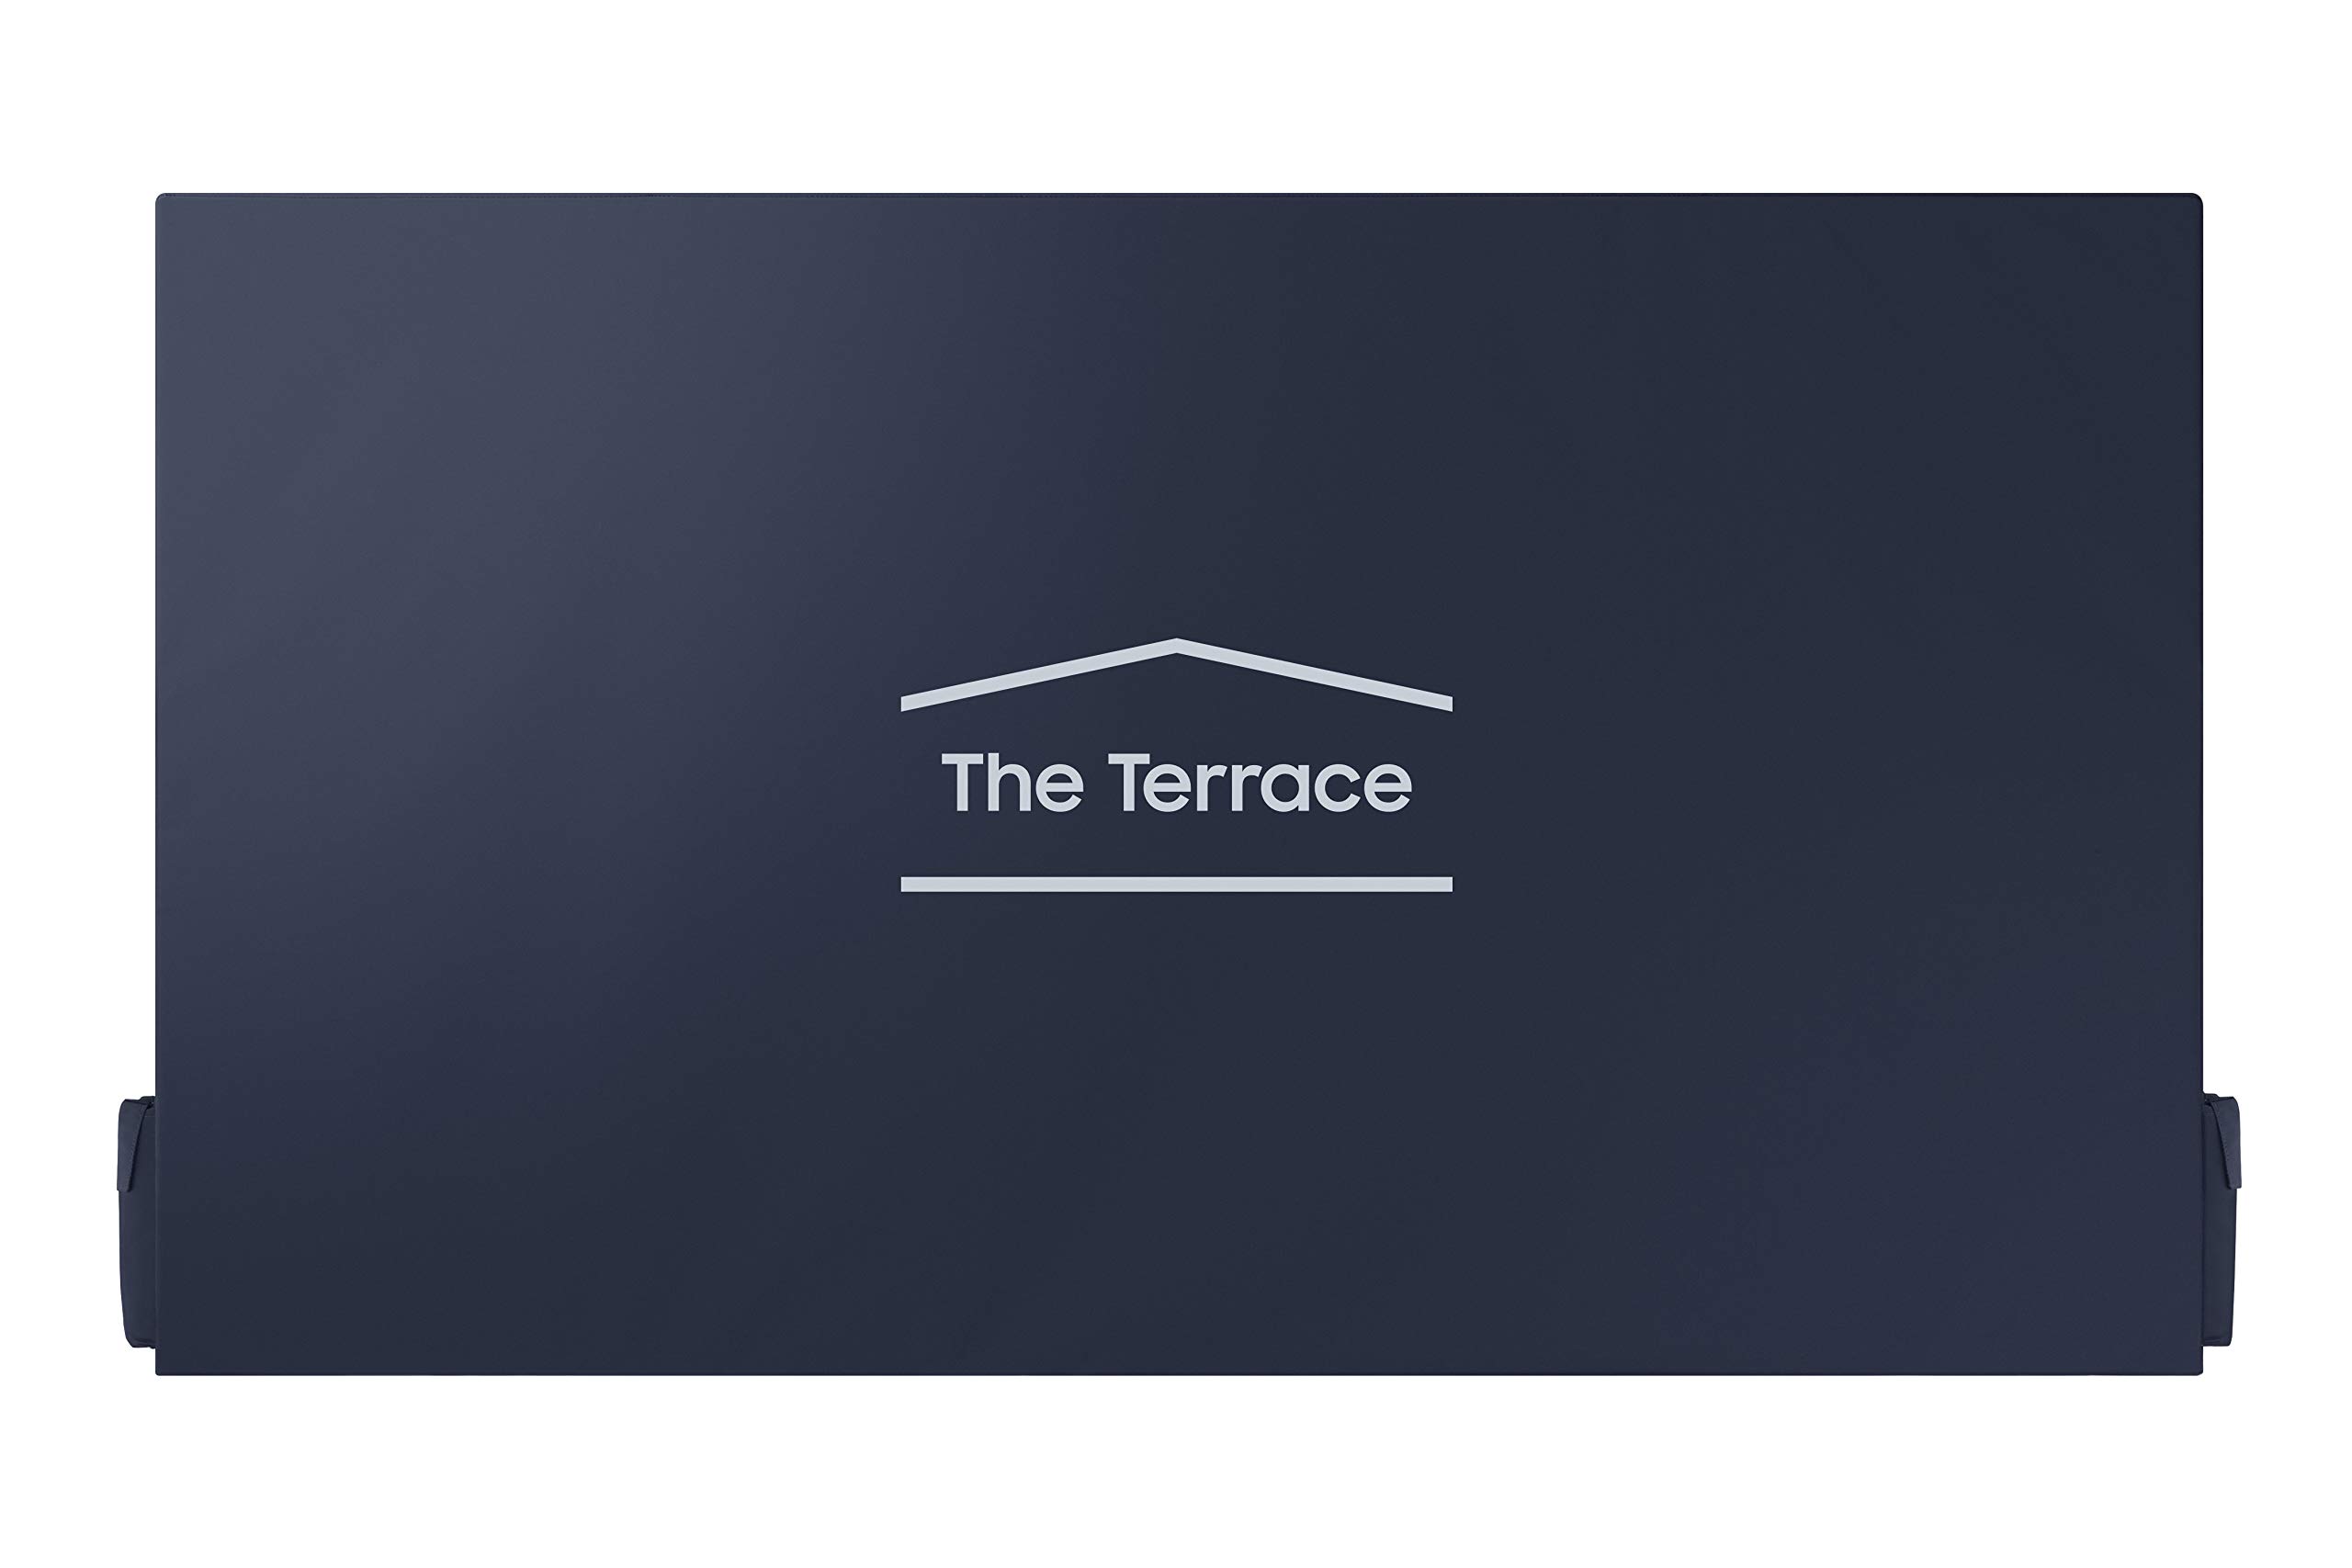 Samsung Terrace TV DUST Covers